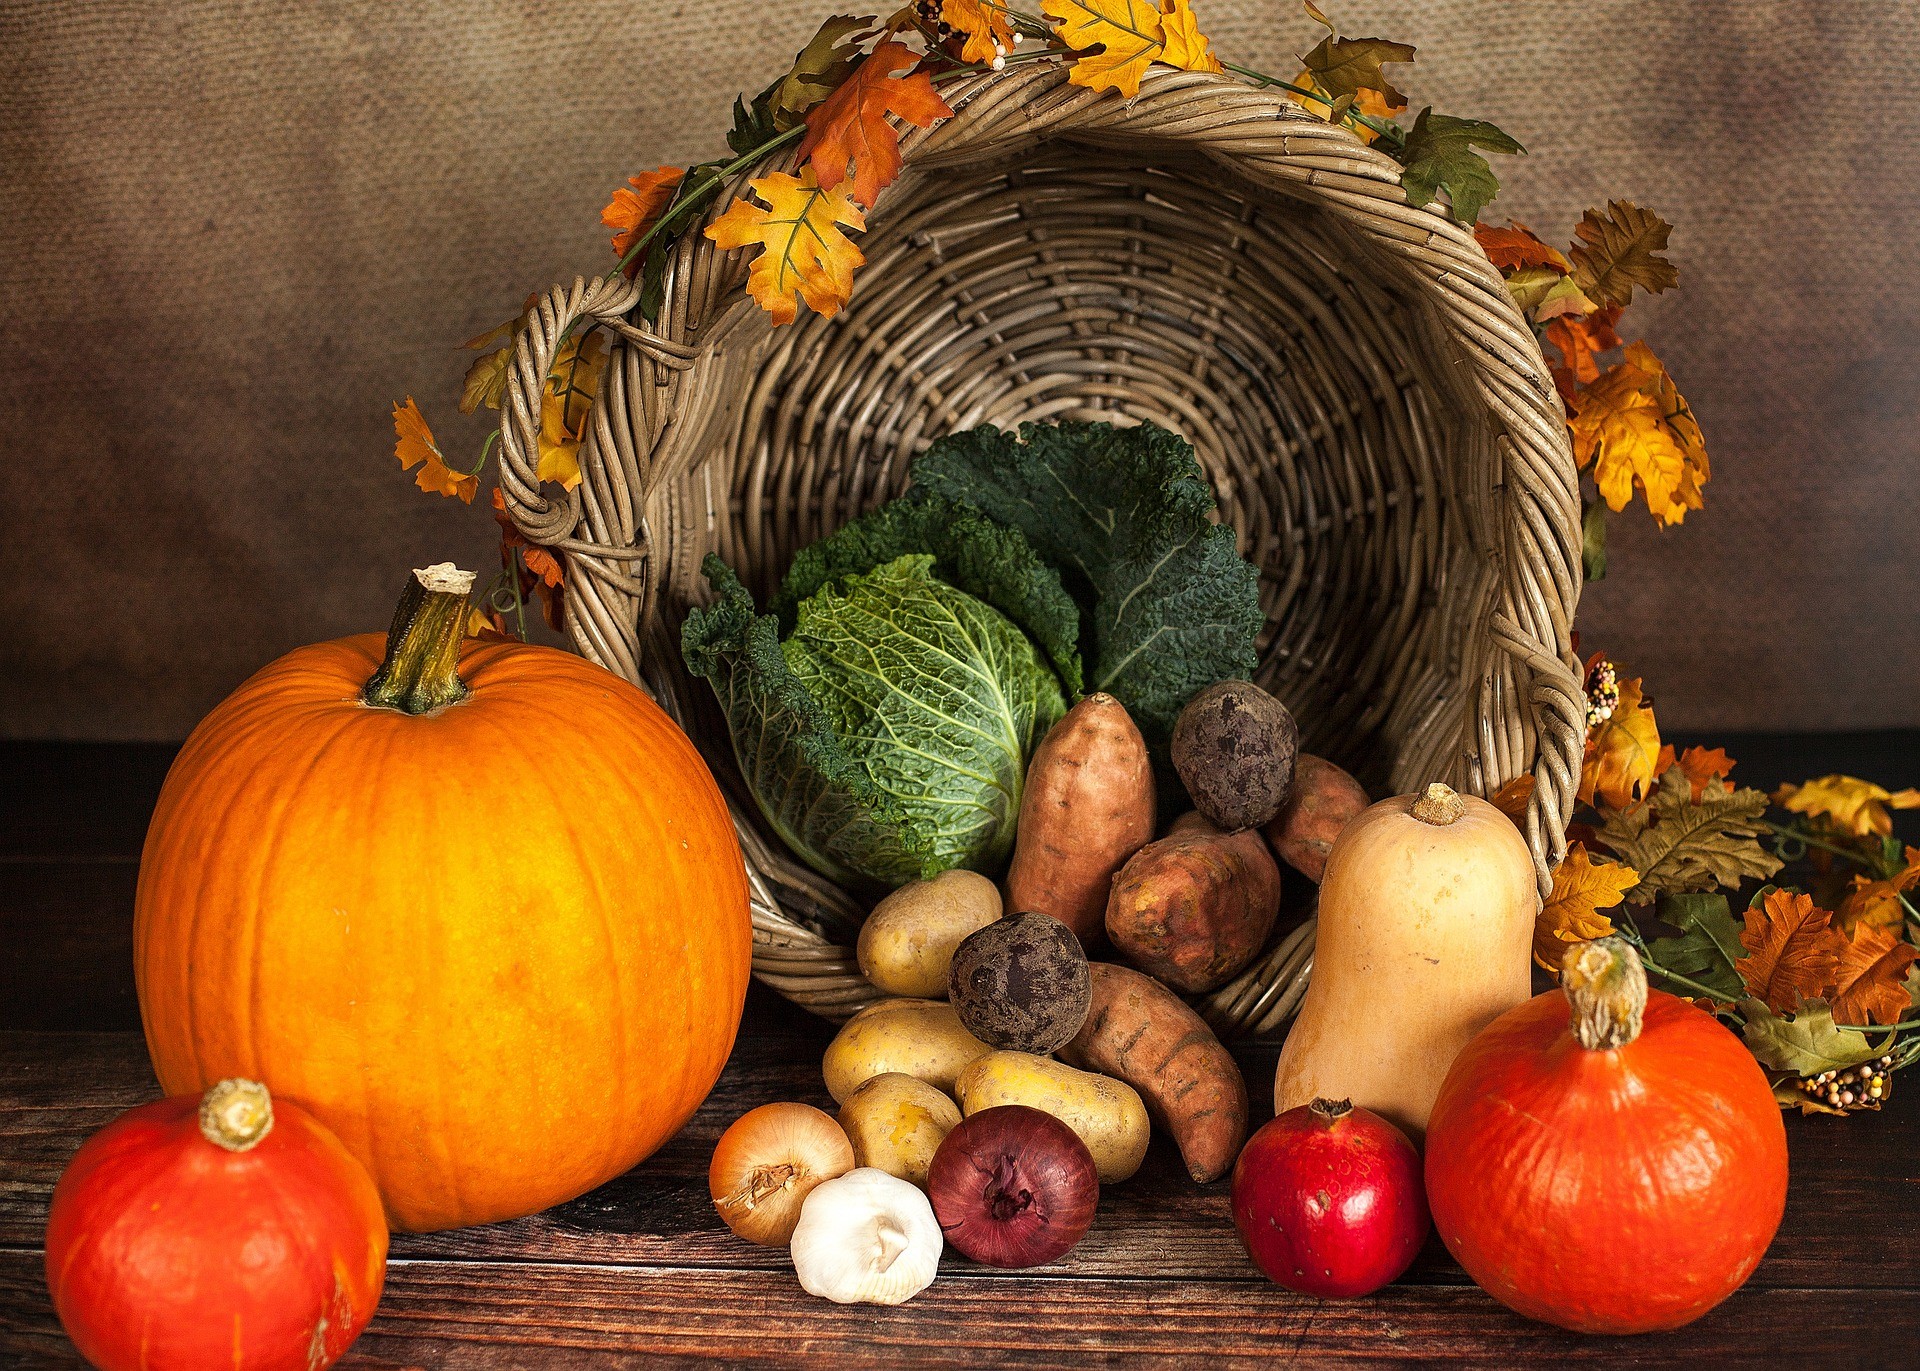 Herbstgemüse - Welche Gemüsesorten kann man roh essen? (Quelle: Pixabay.com)